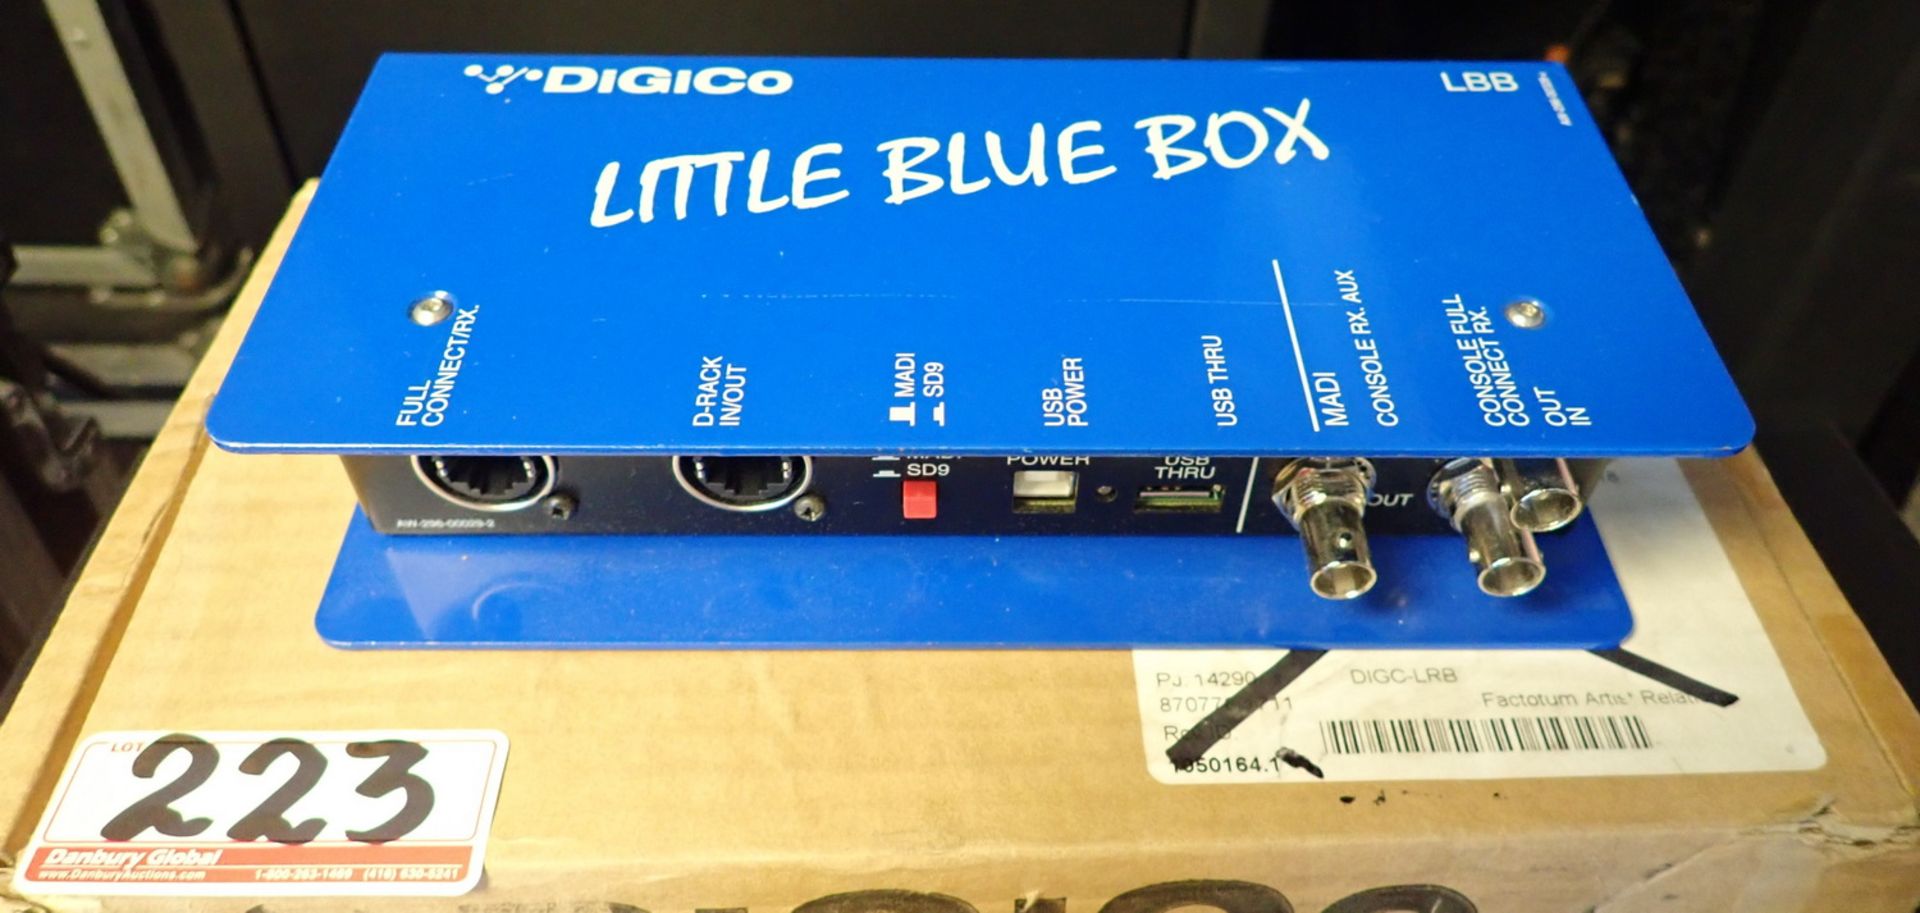 DIGIGO LITTLE BLUE BOX